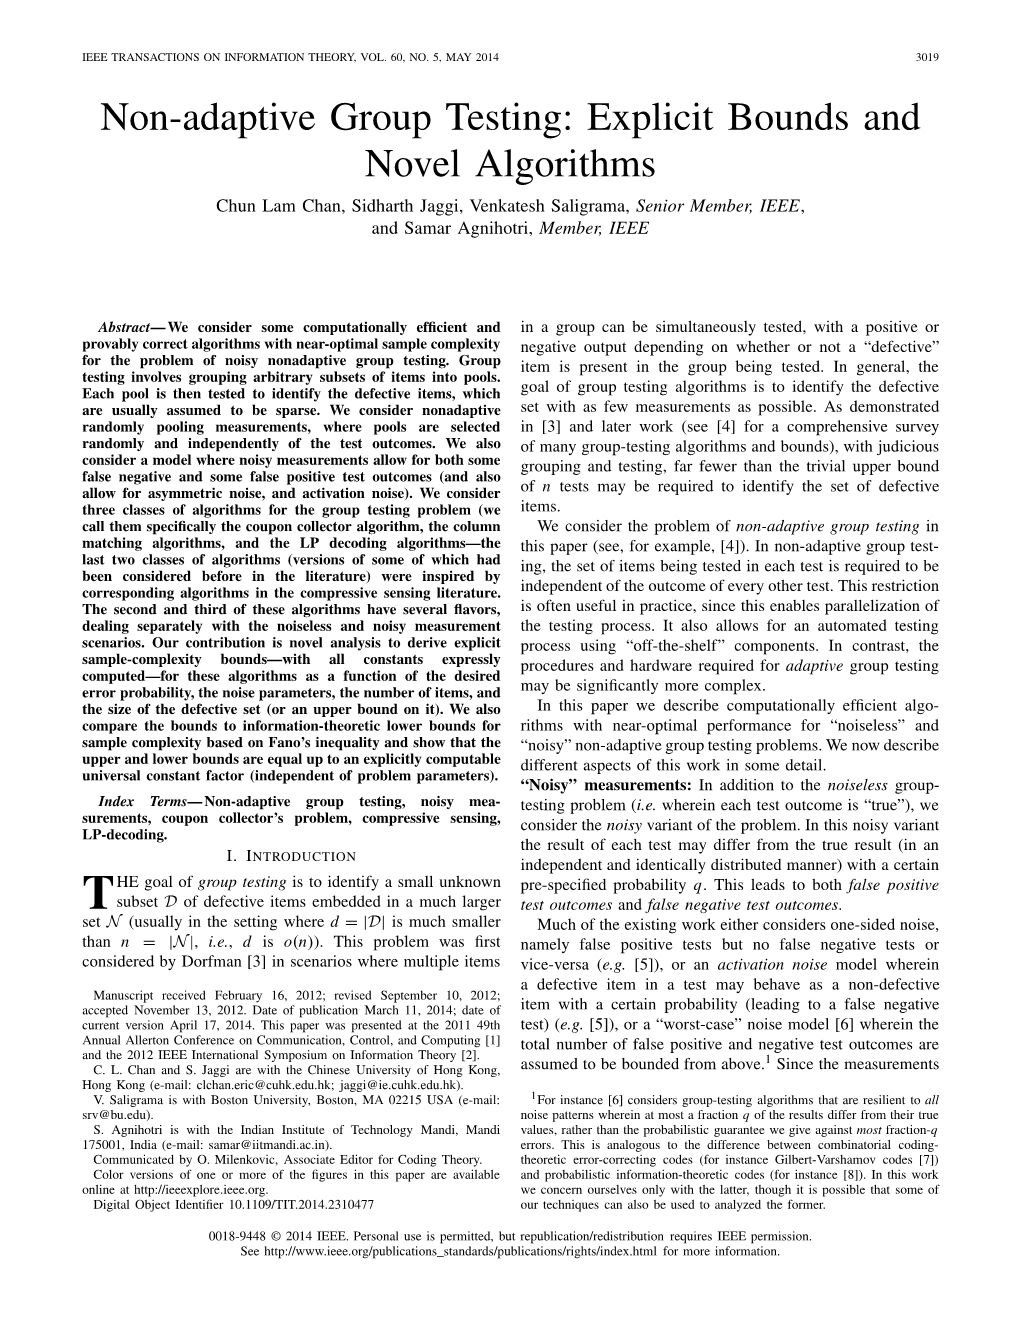 Non-Adaptive Group Testing: Explicit Bounds and Novel Algorithms